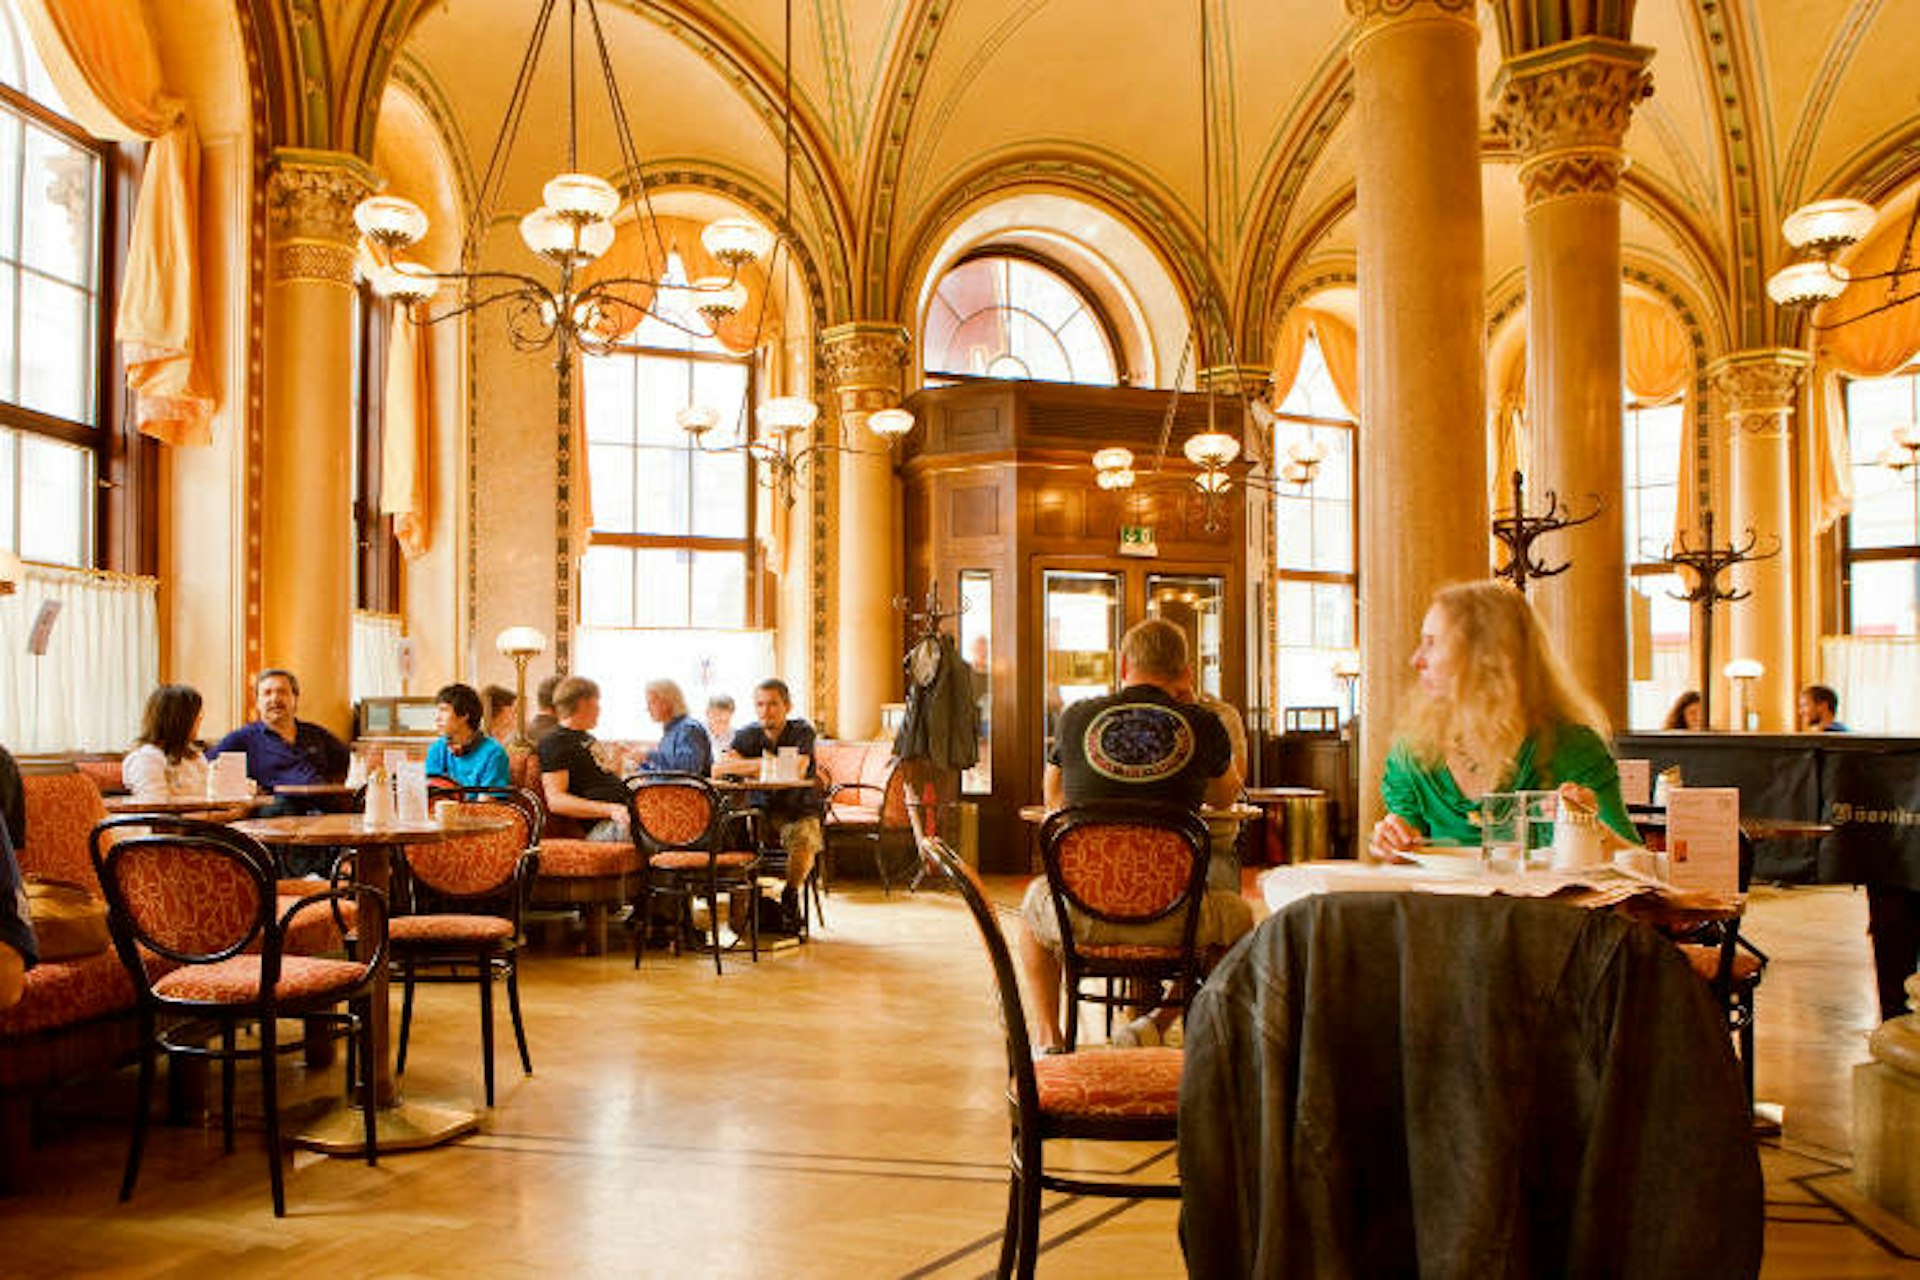 Enjoying the opulent surrounds at Café Central. Image by Jean-Pierre Lescourret/Photostock/Getty